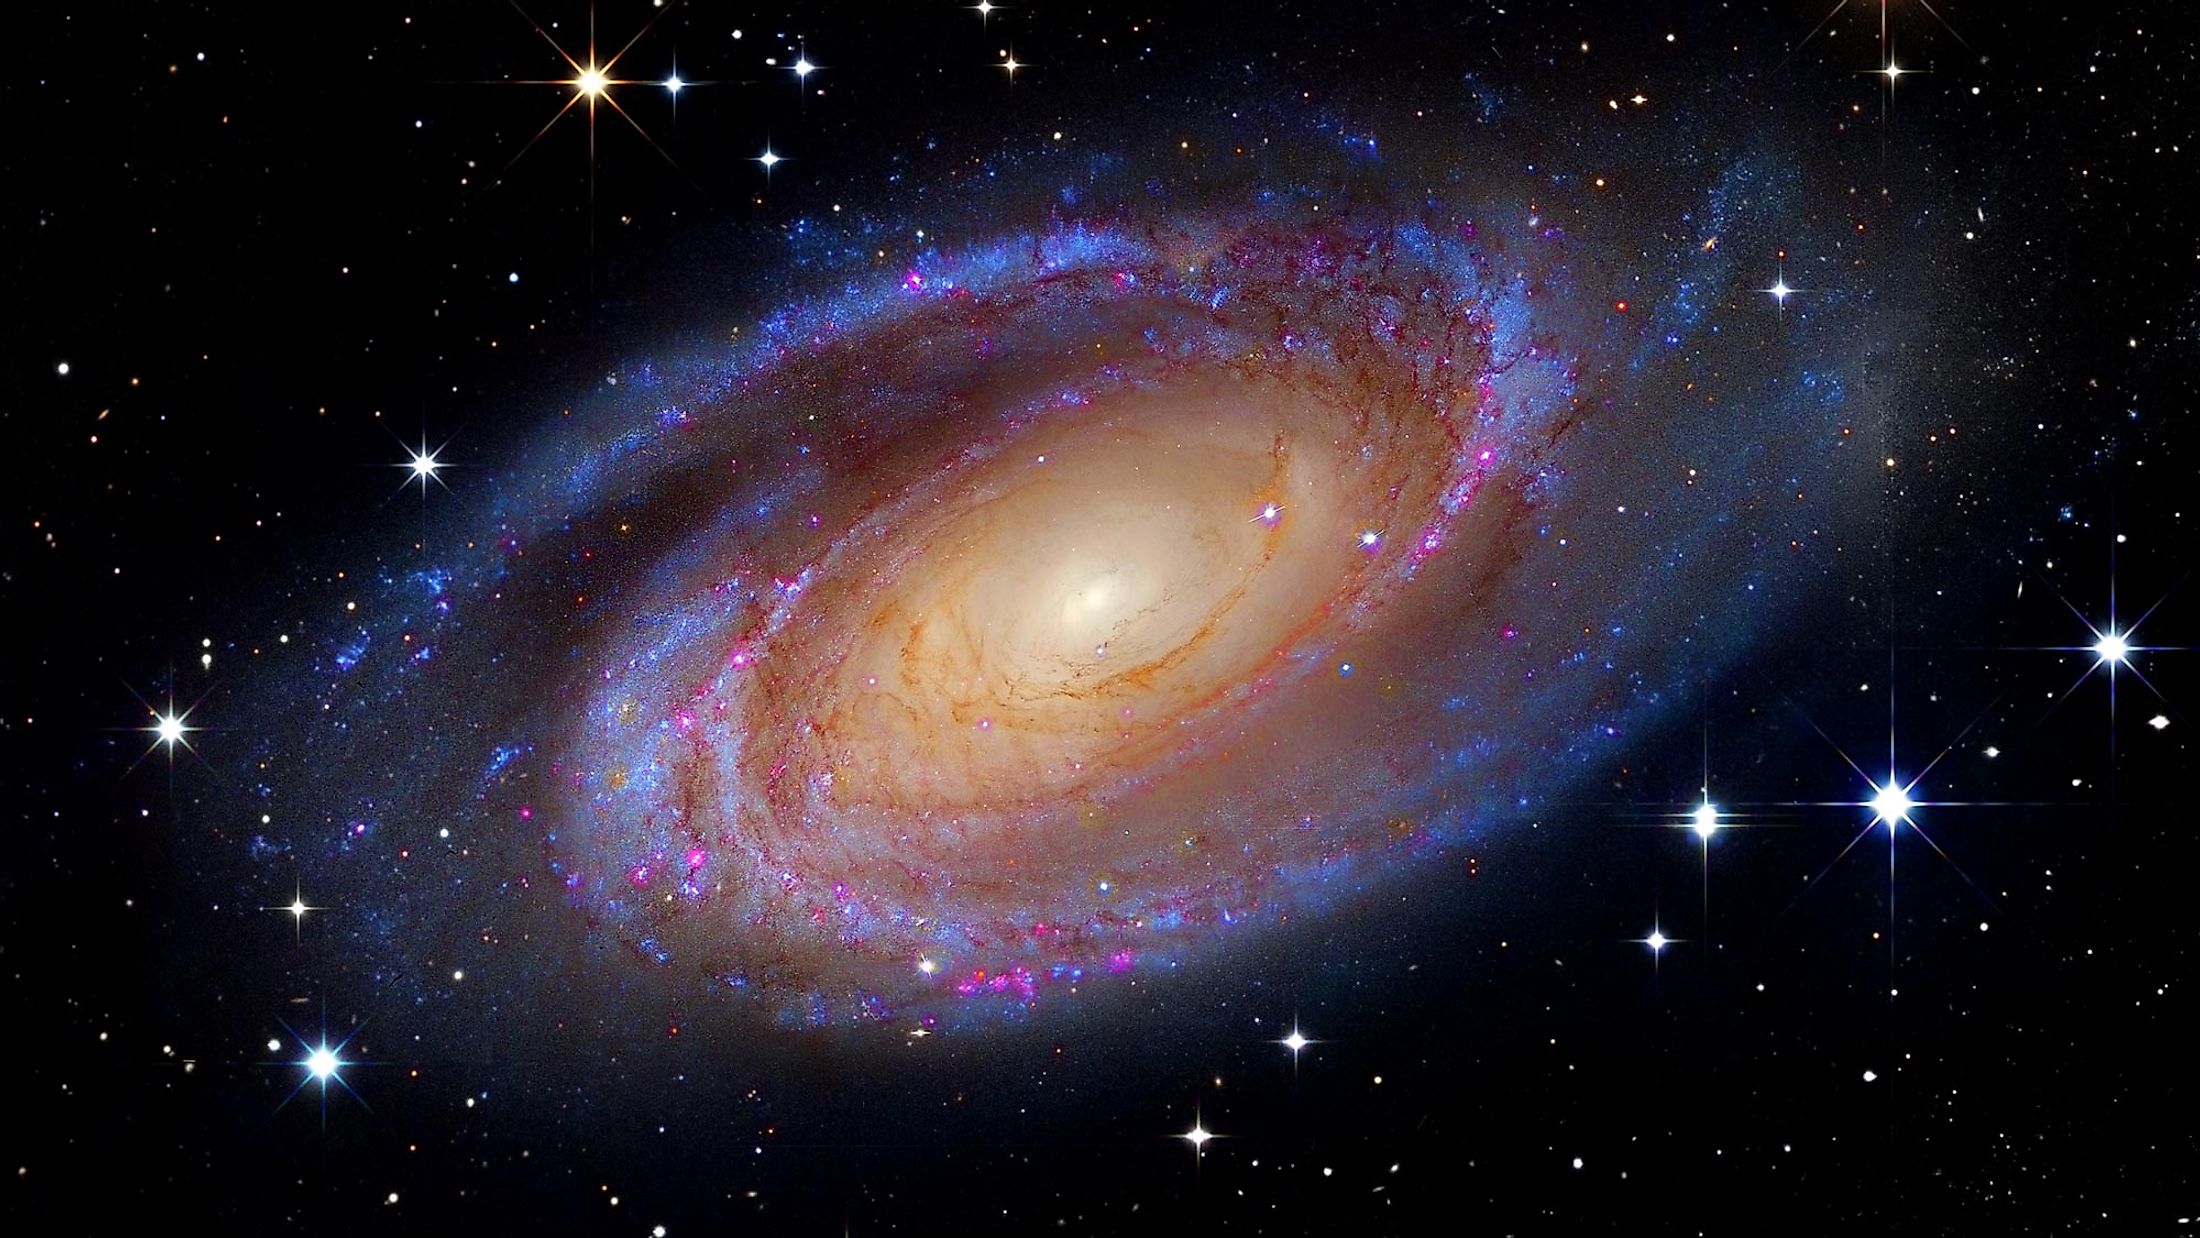 Hubble image of a distant spiral galaxy. Image credit: NASA/ESA